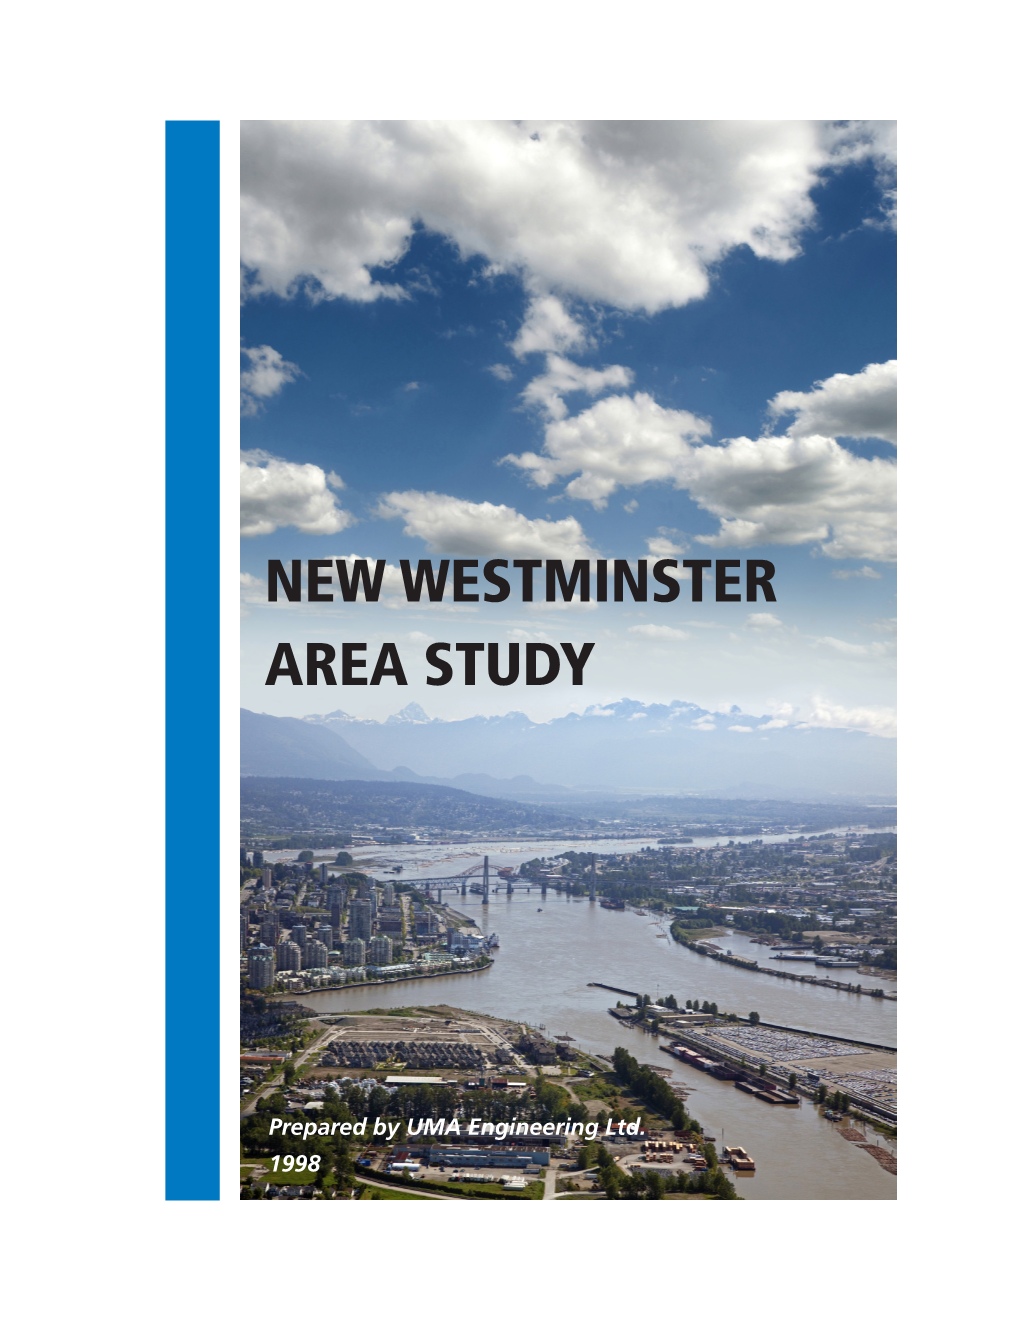 New Westminster Area Study by UMA Engineering Ltd. 1998